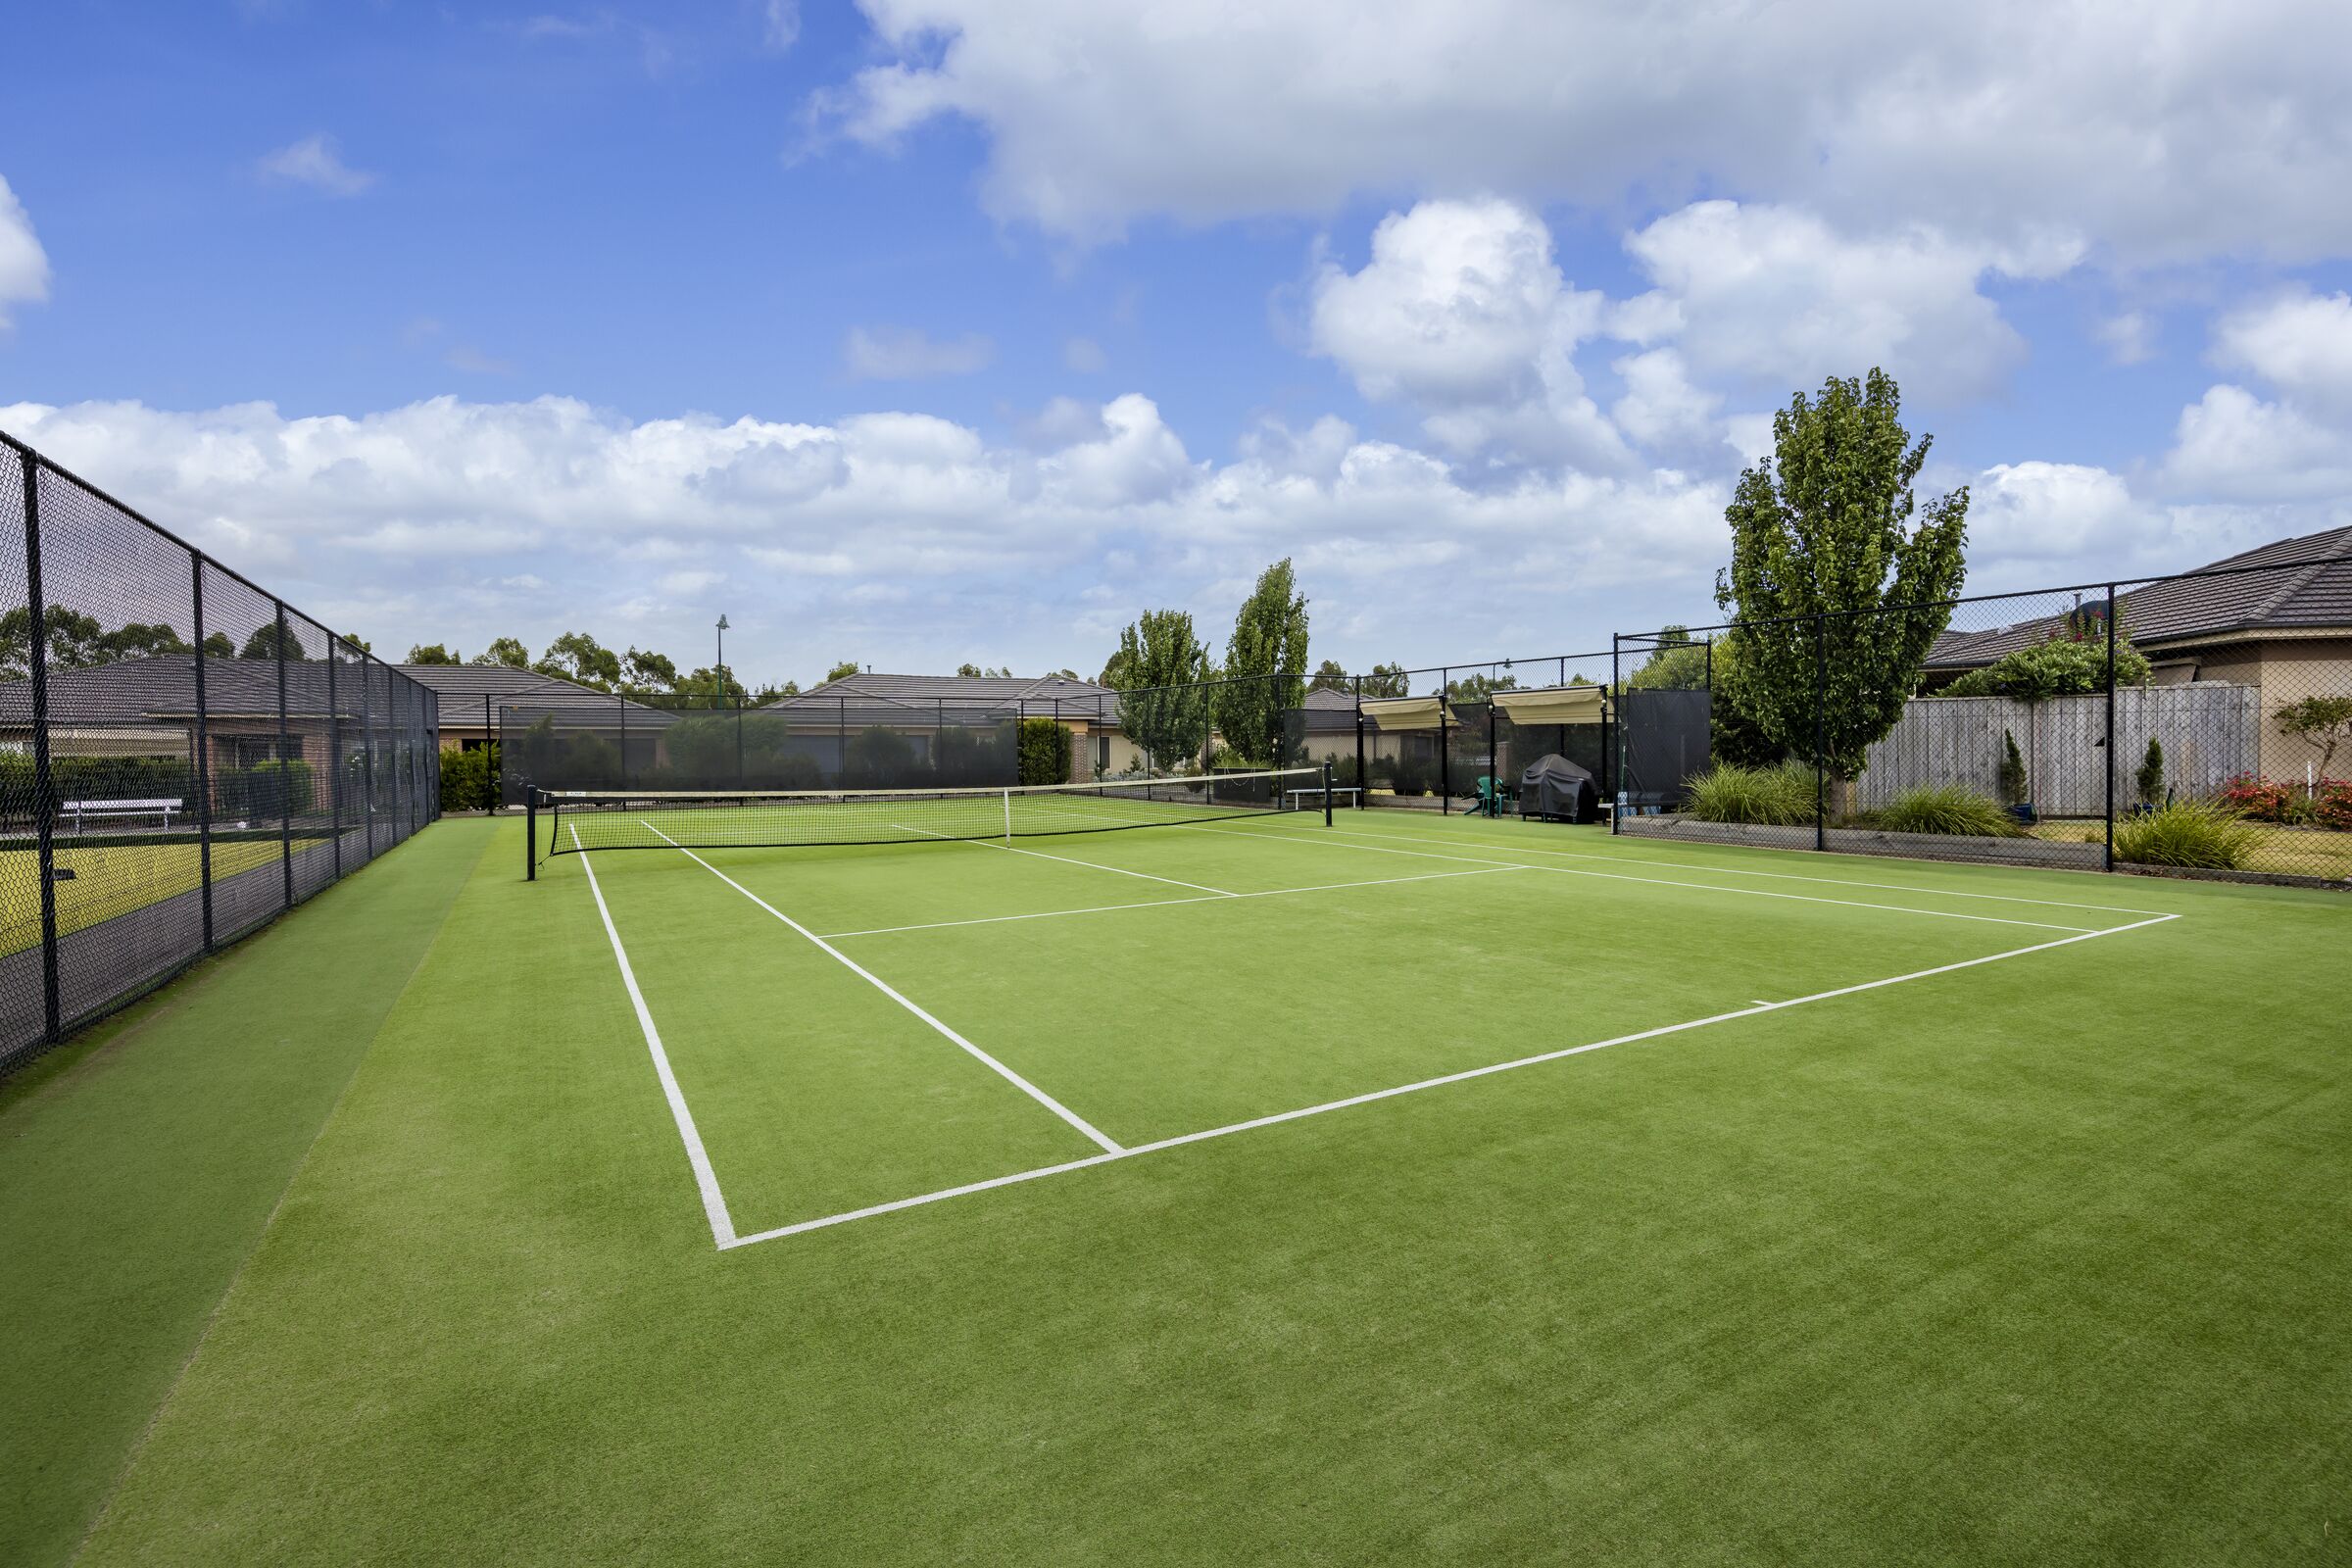 Waterford Park grass tennis court